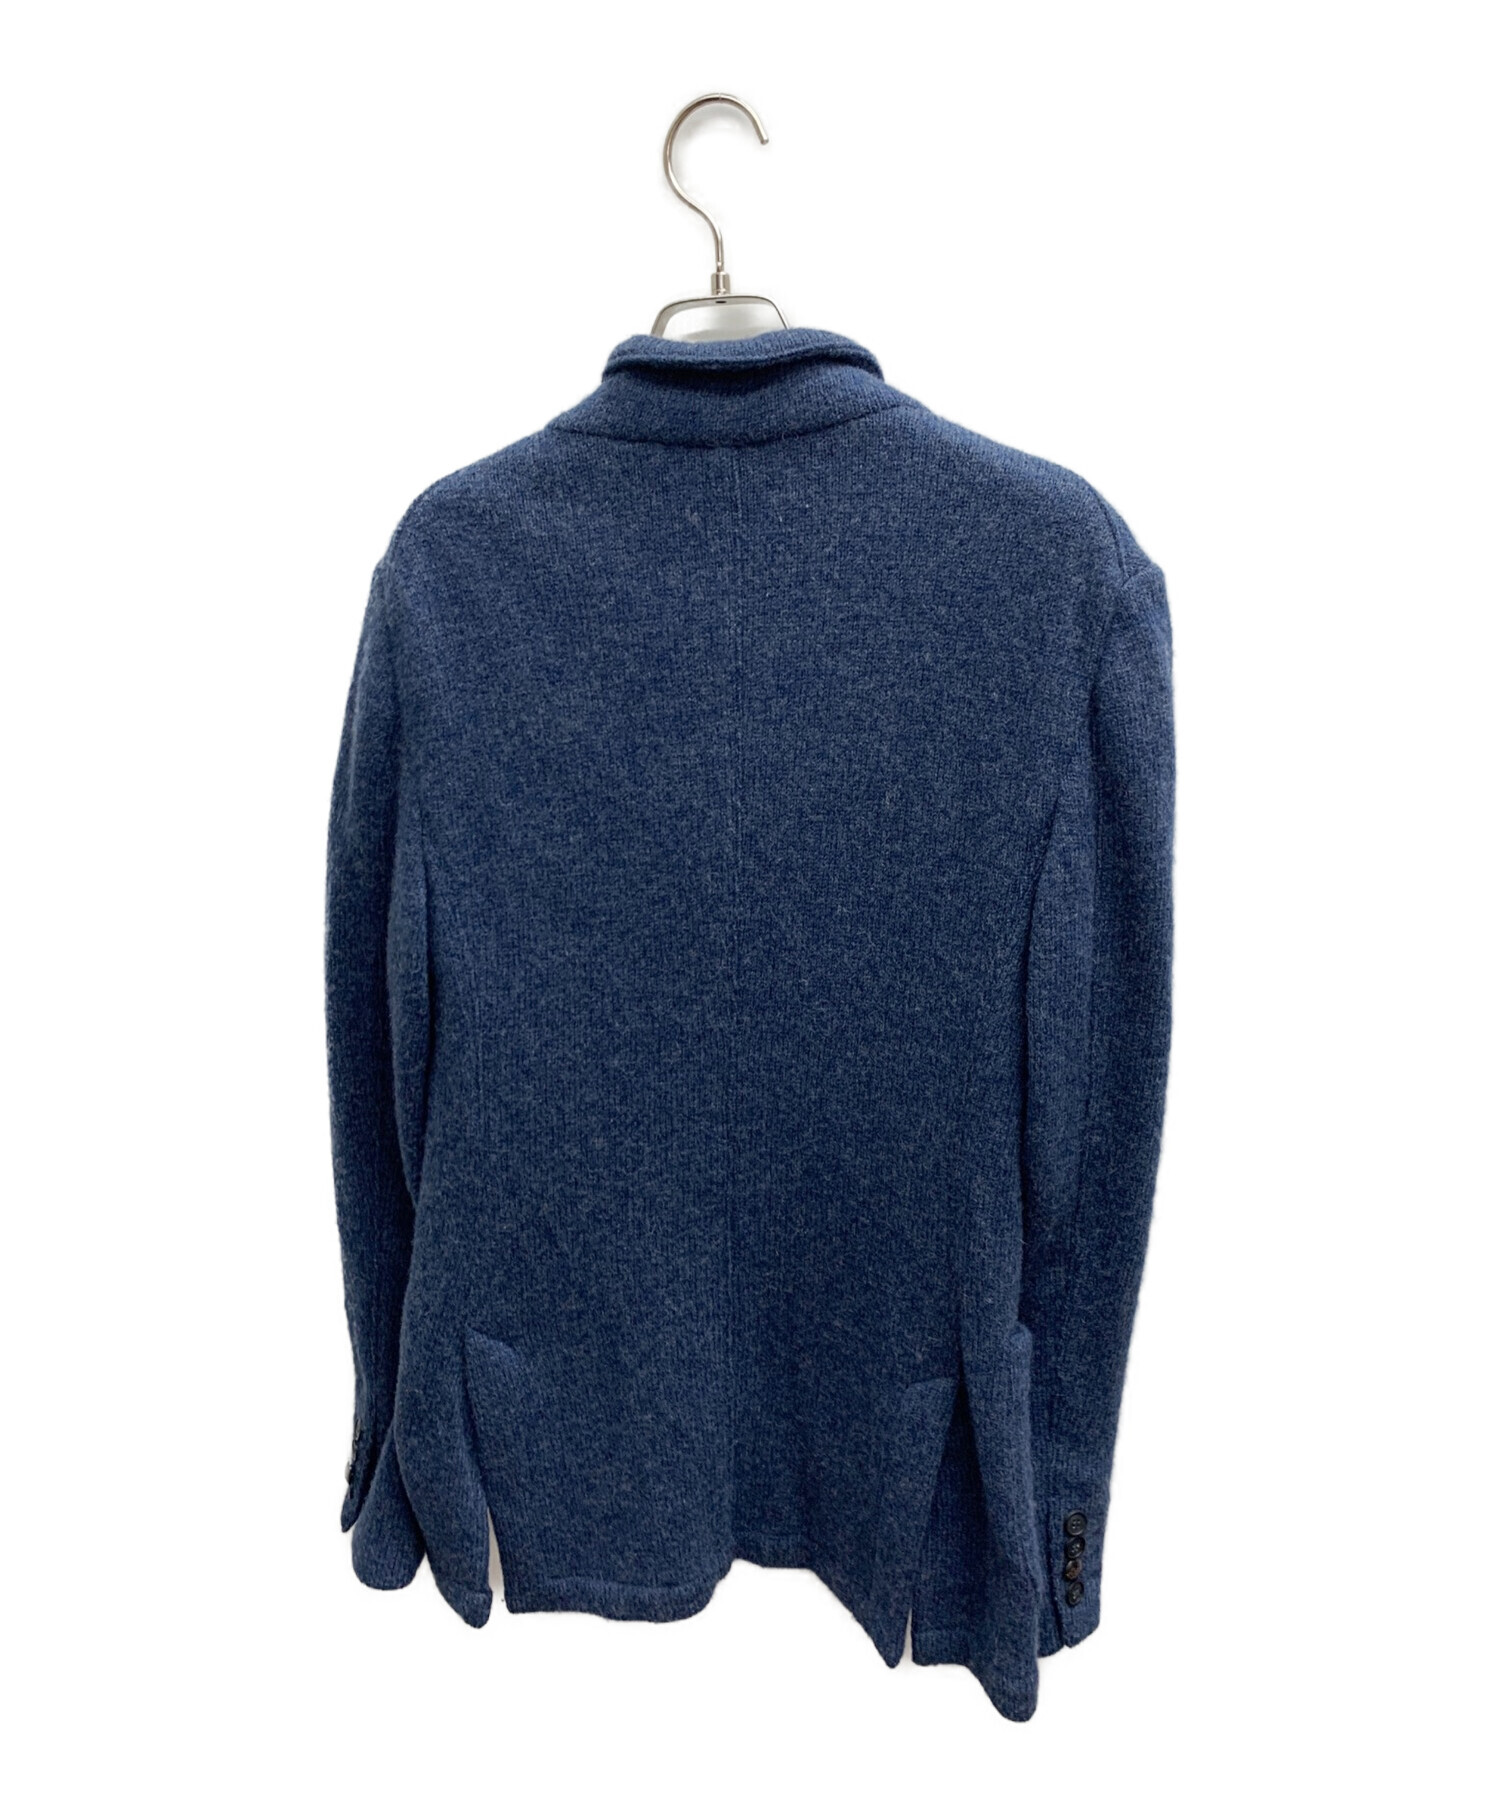 McRitchie (マックリッチ) ウールジャケット ブルー サイズ:S